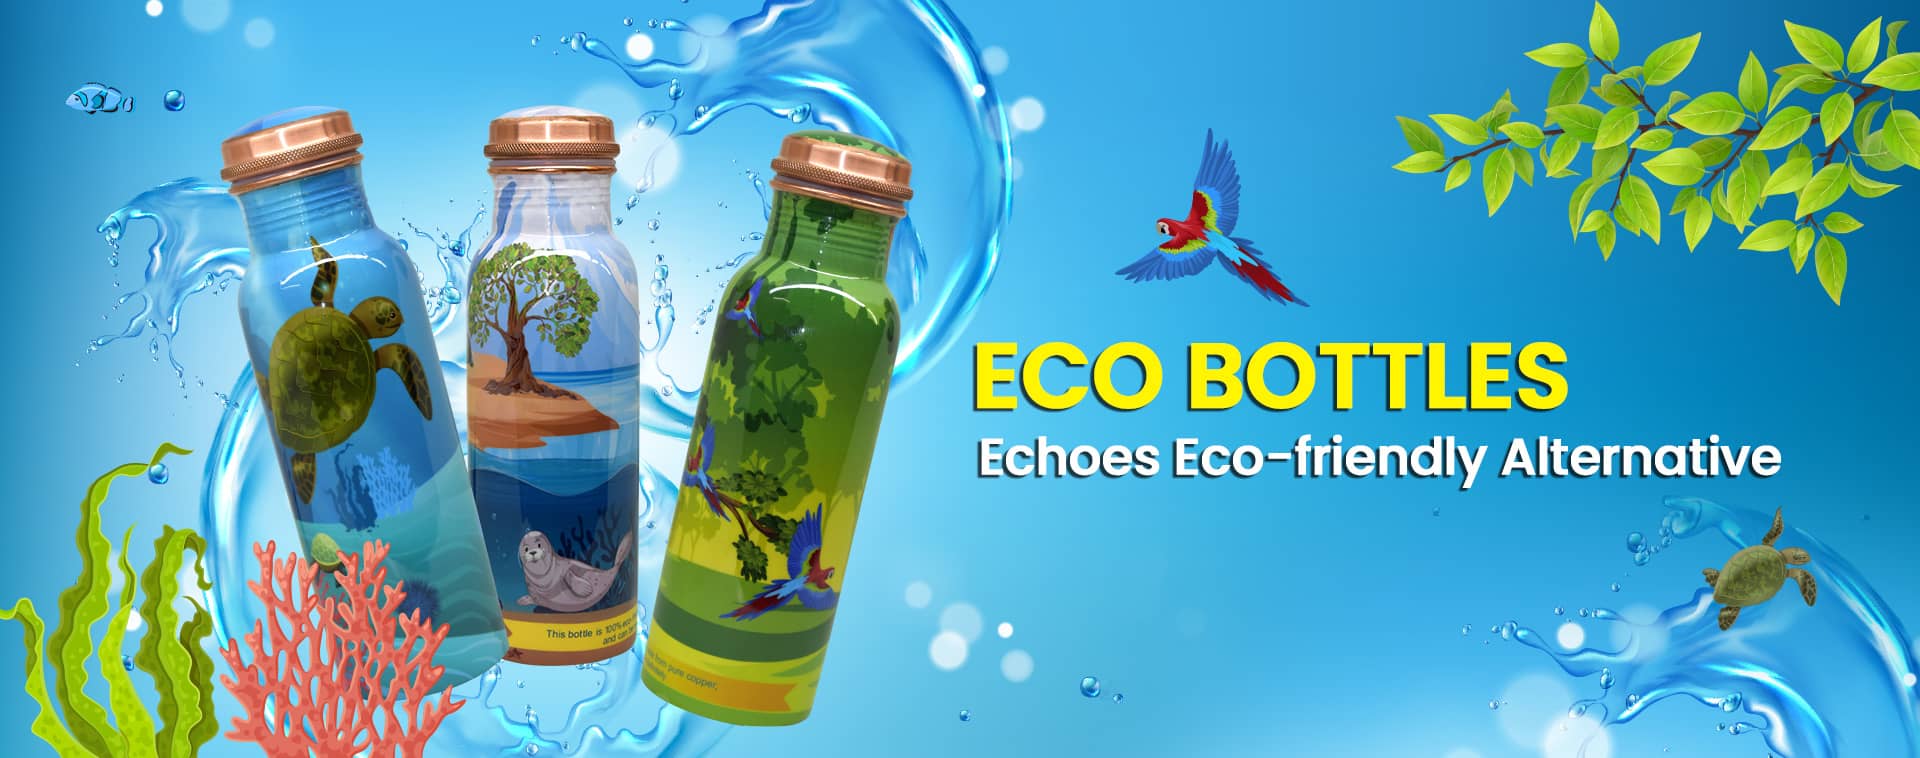 Eco Bottles Echoes Eco-friendly Alternative